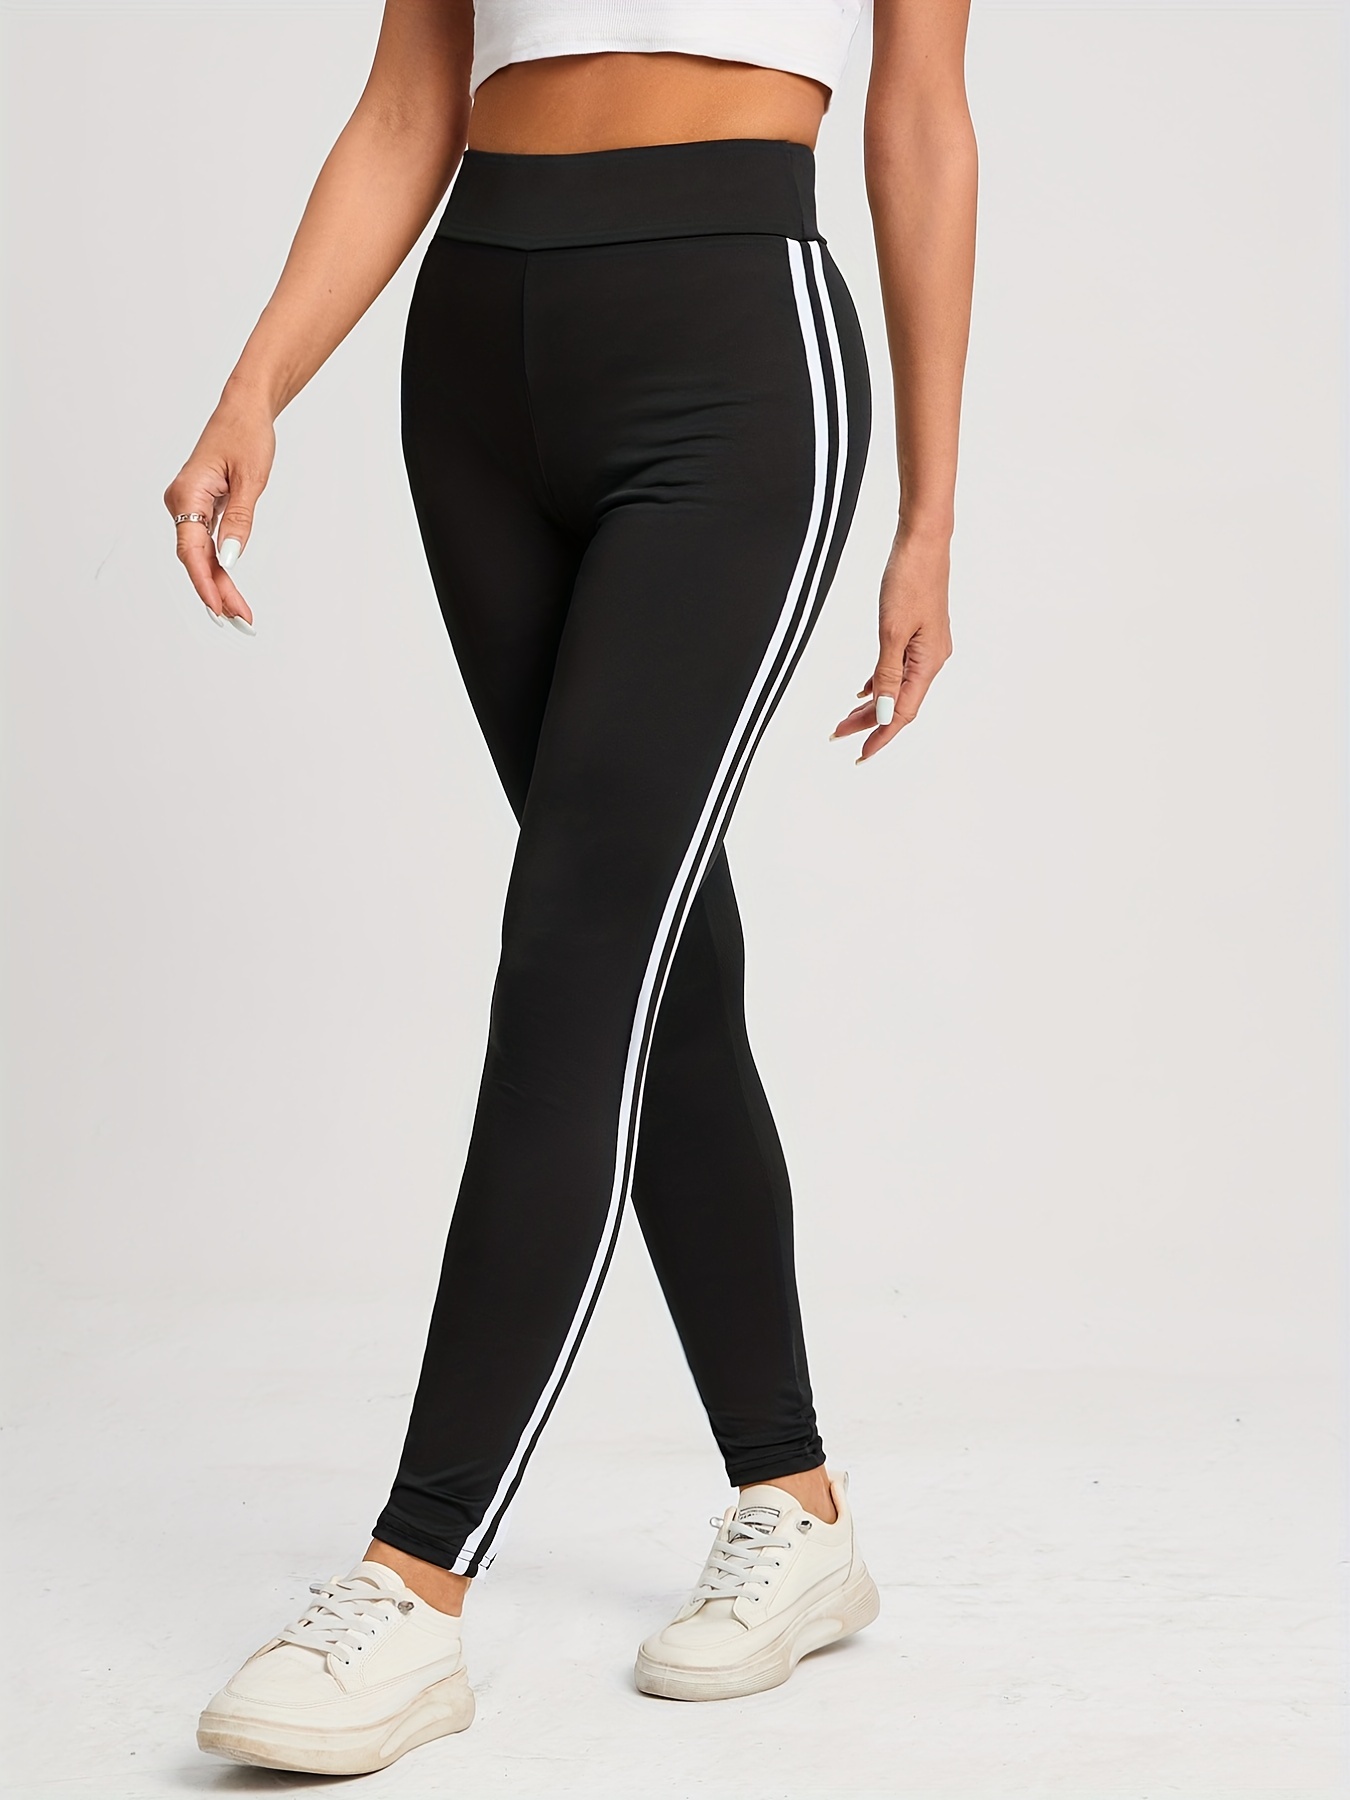 Adidas Women Leggings High waist Small Black white Stripe Active